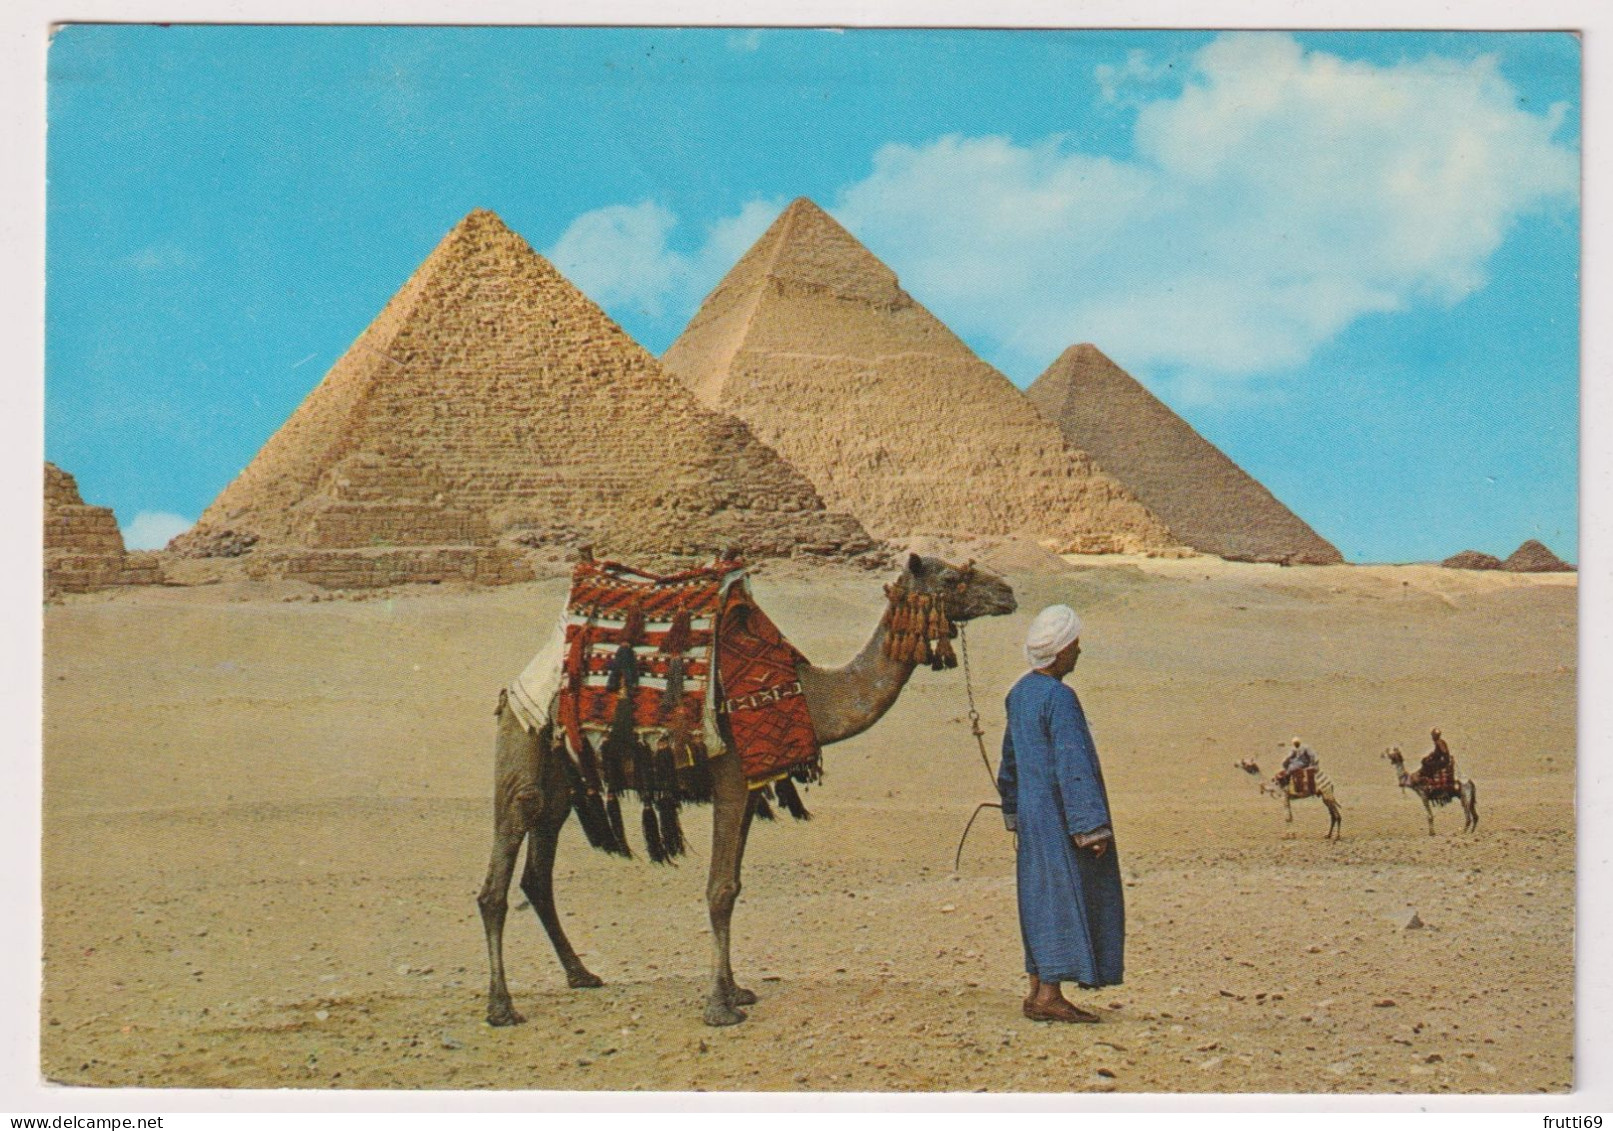 AK 198218 EGYPT - Giza - The Giza Pyramids - Pyramids